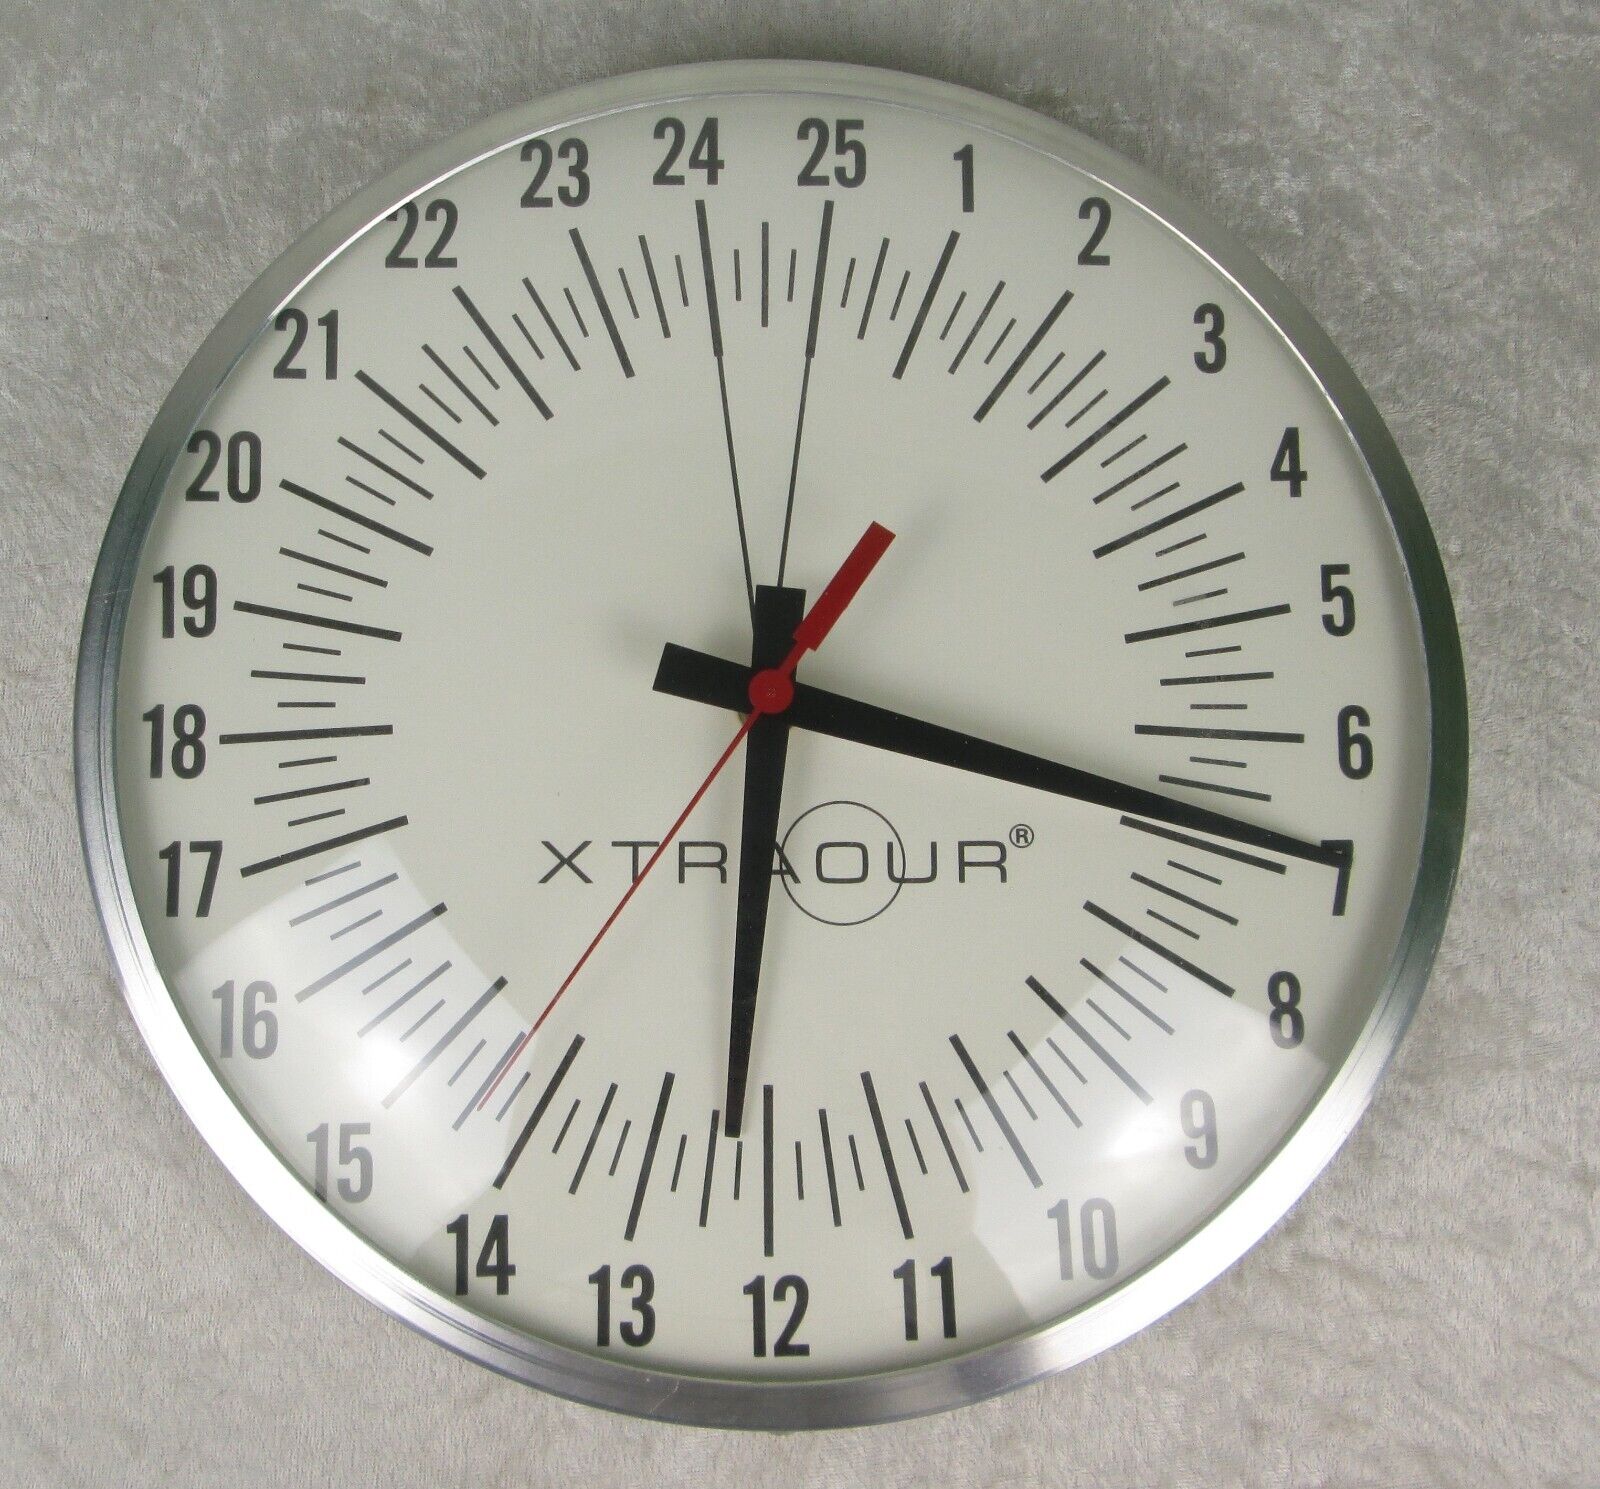 Circadian Clock Co. 25 Hour Xtraour Clock 1990 Analog Battery Morton Rachofsky